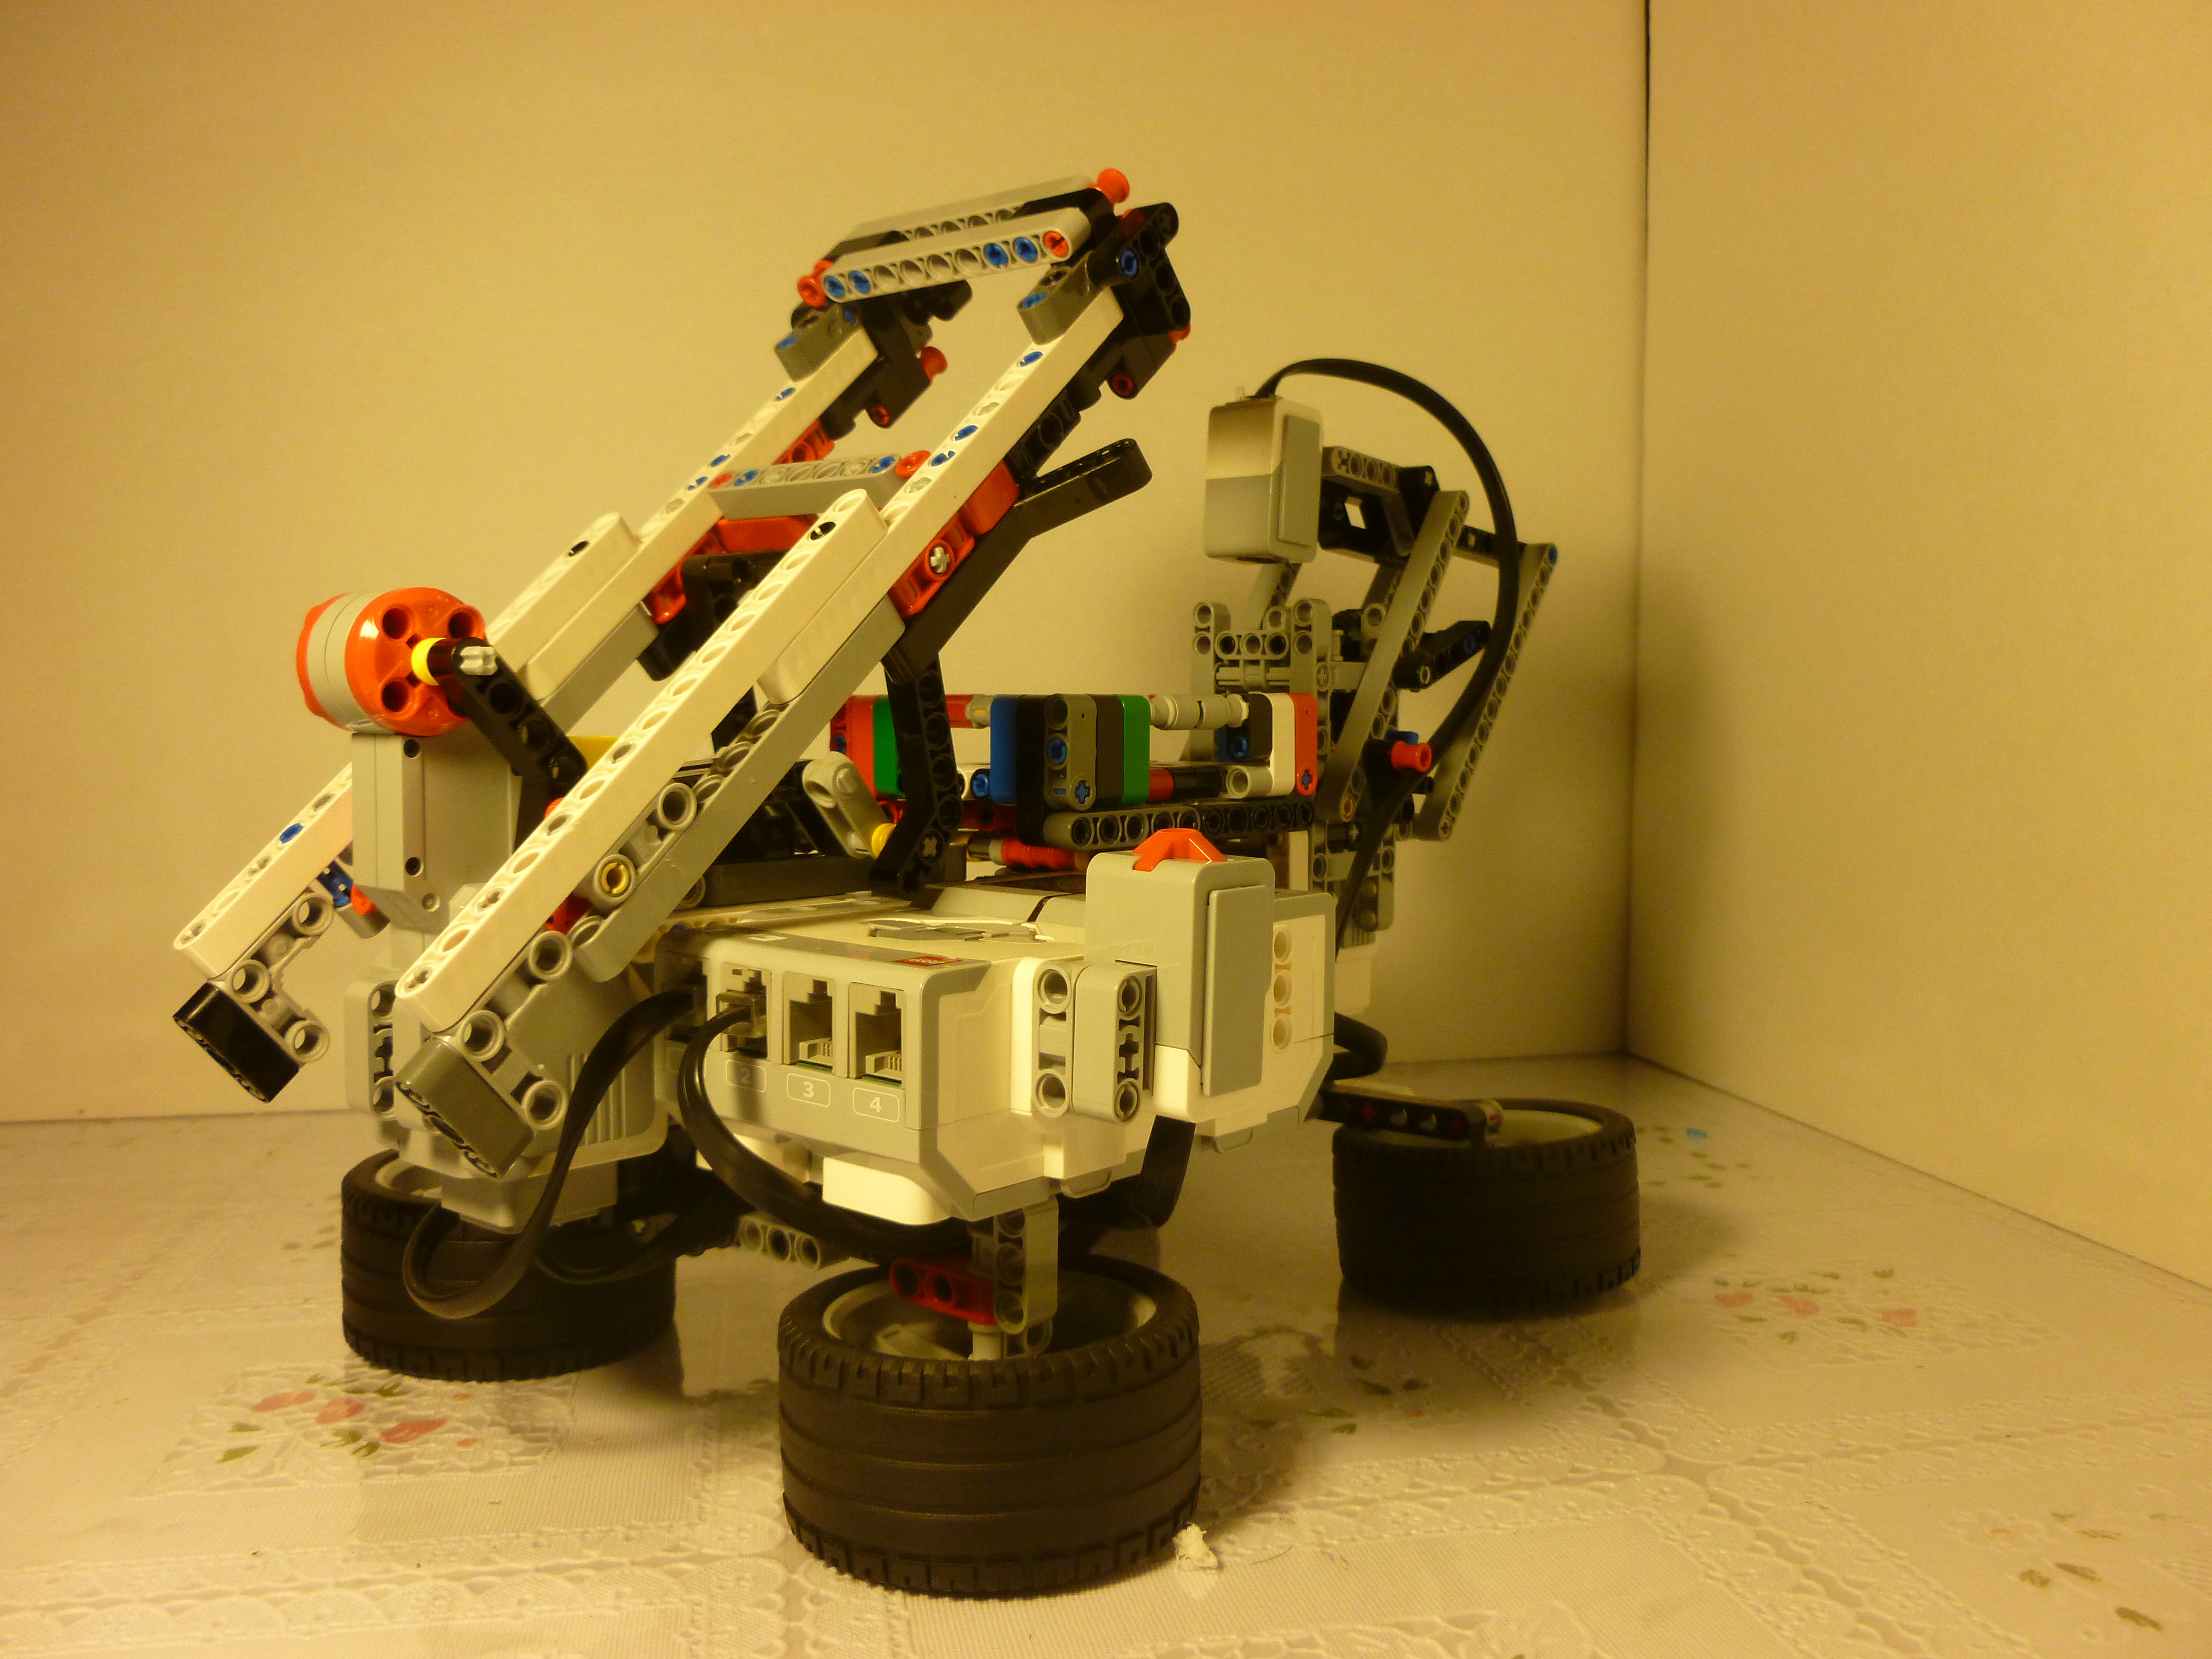 Lego Robots to Mesmerize You